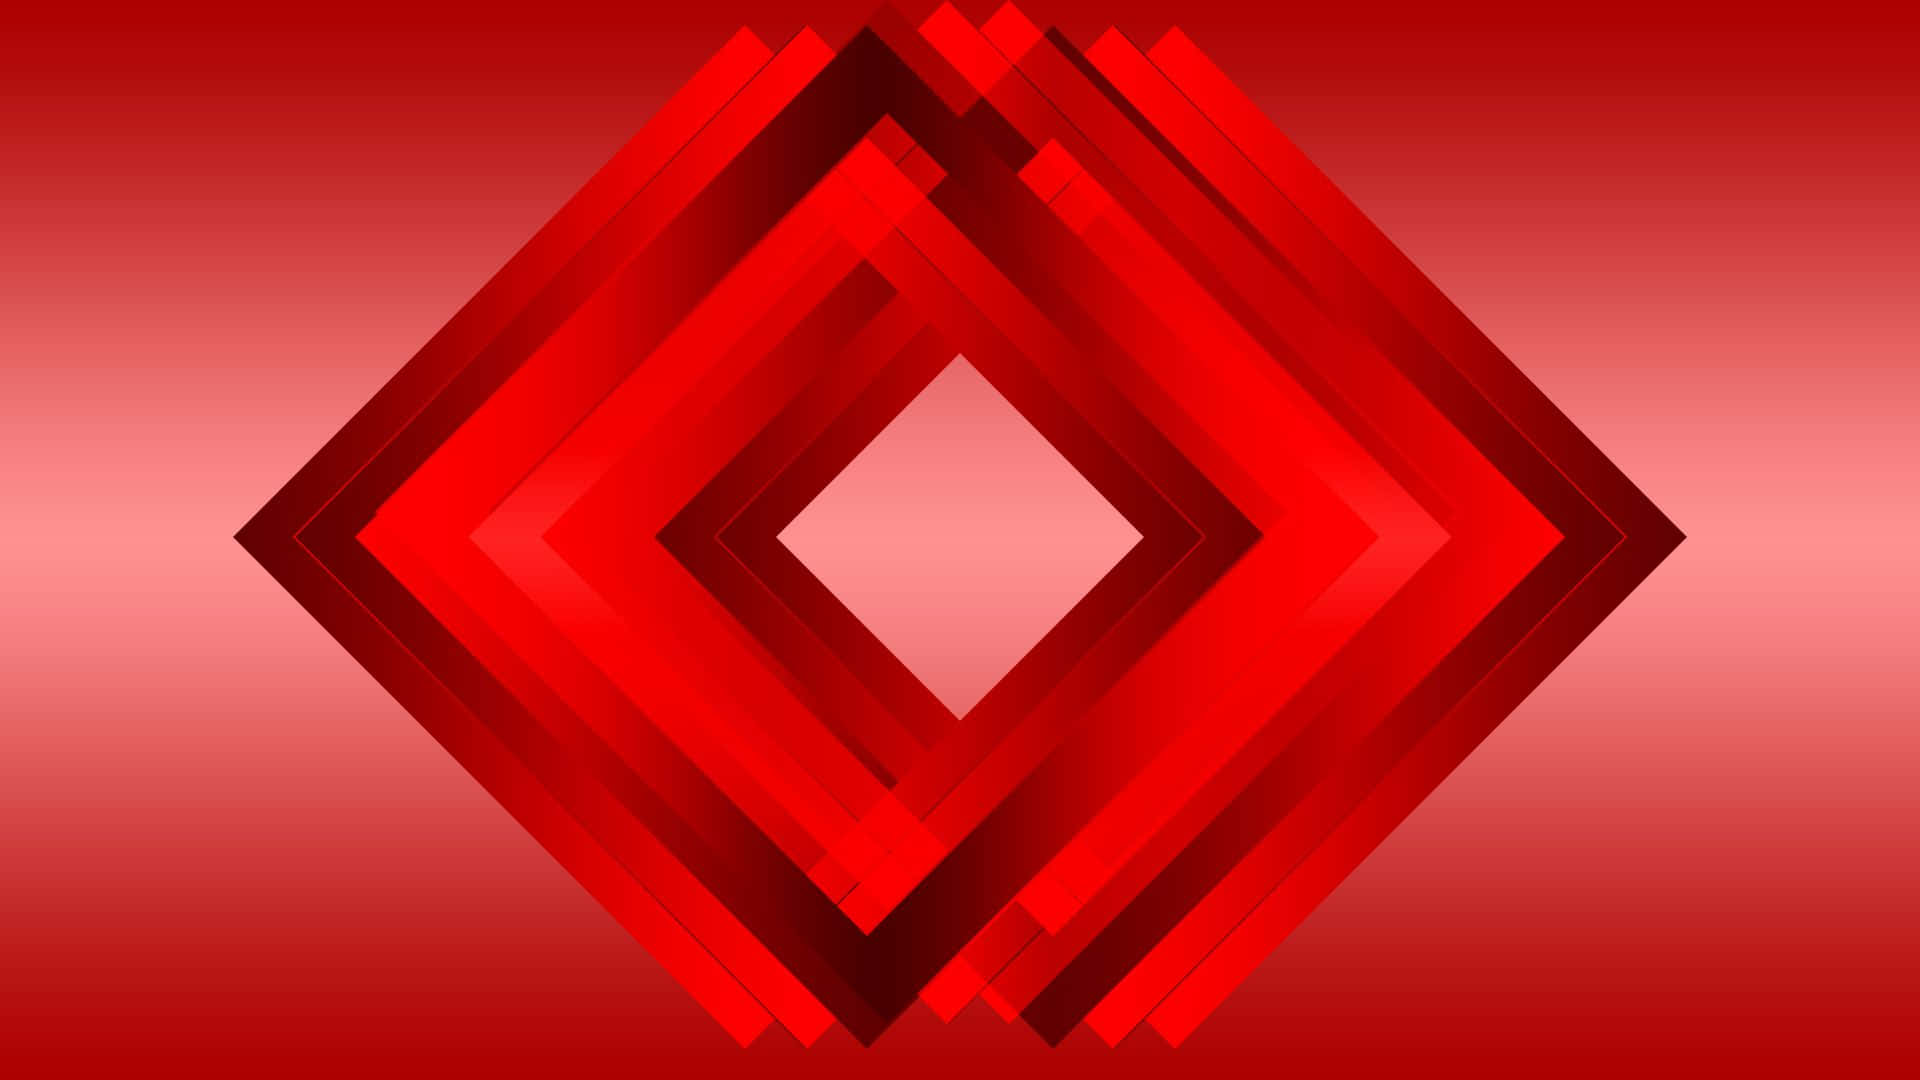 1920x1080 Red Wallpaper